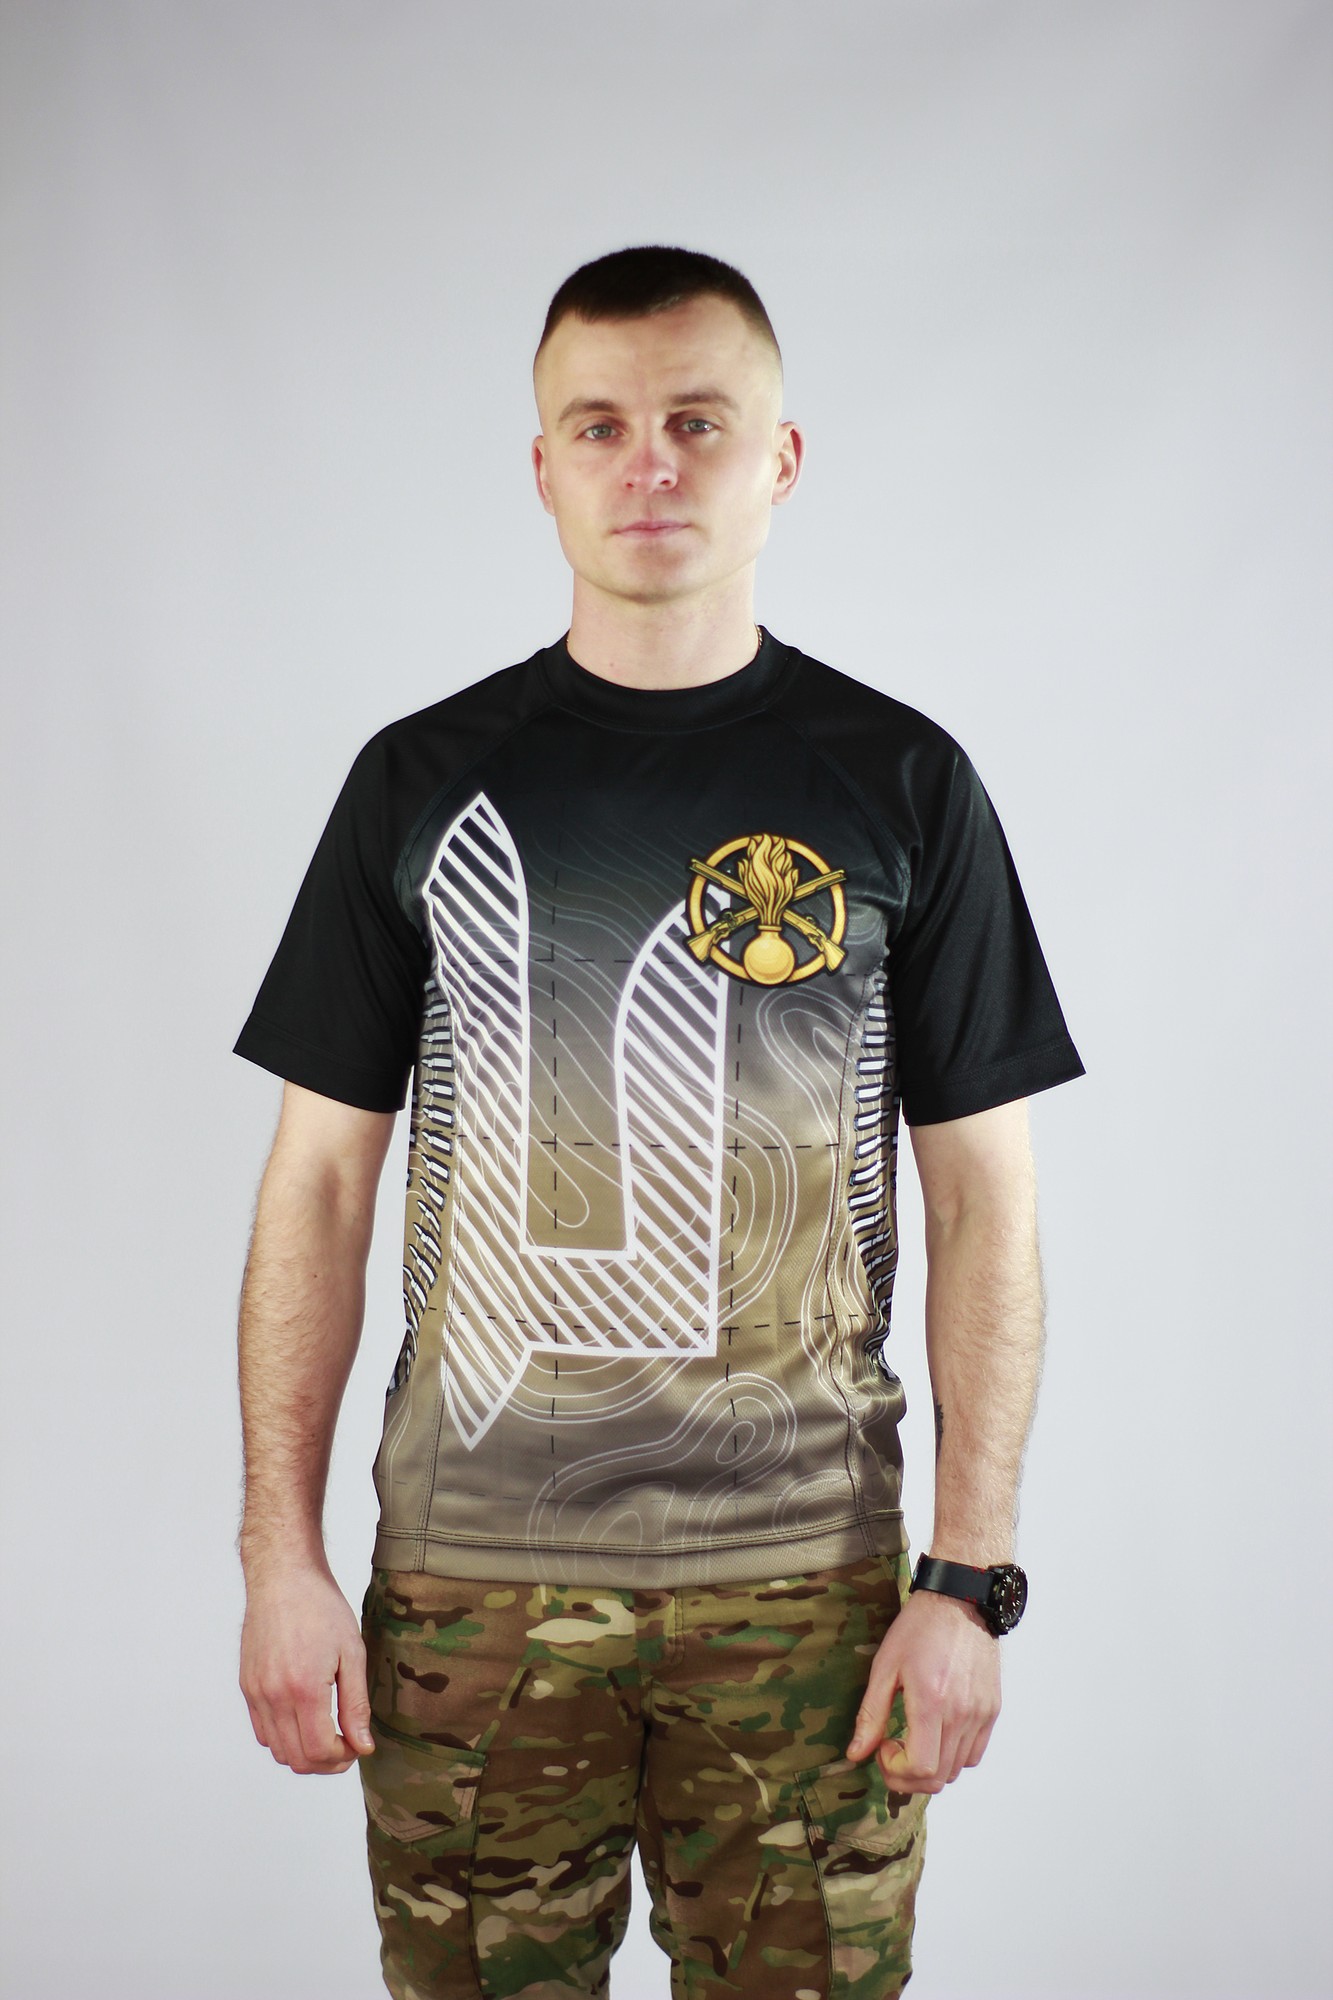 T-shirt of the Mechanized Army of Ukraine | MC | KRAMATAN Tactical Design